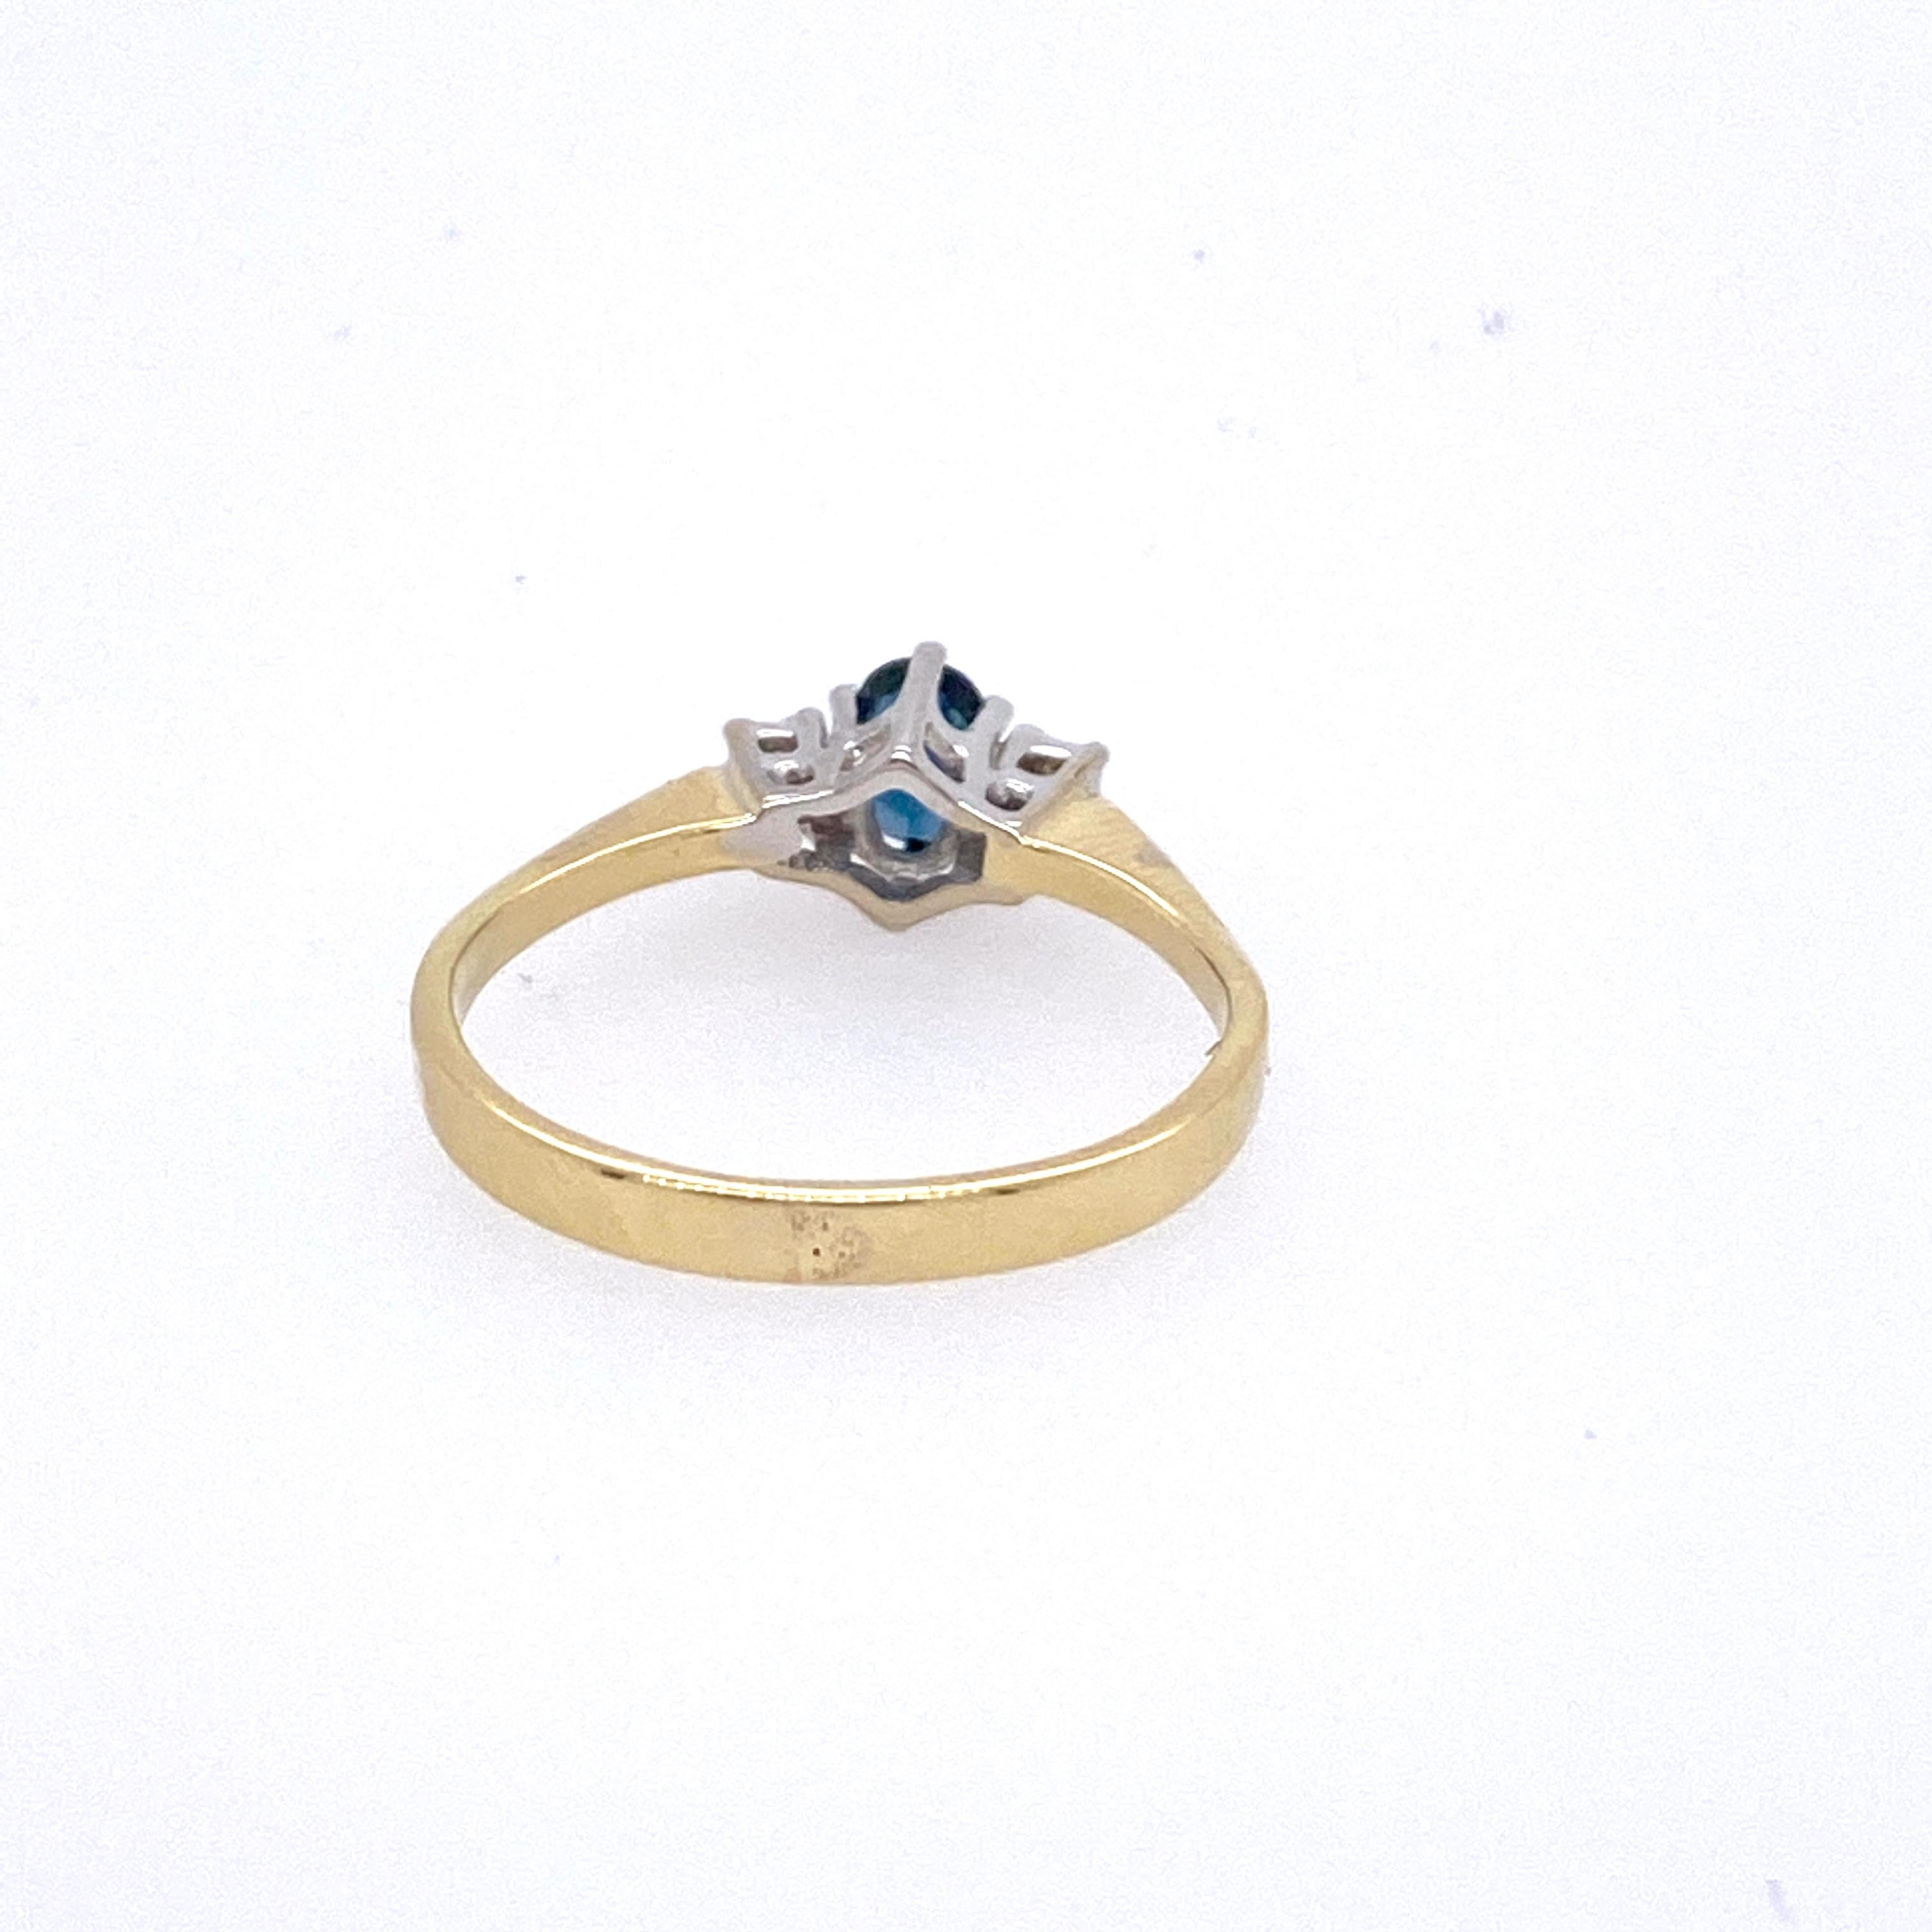 Contemporary Sapphire and Diamond Ring